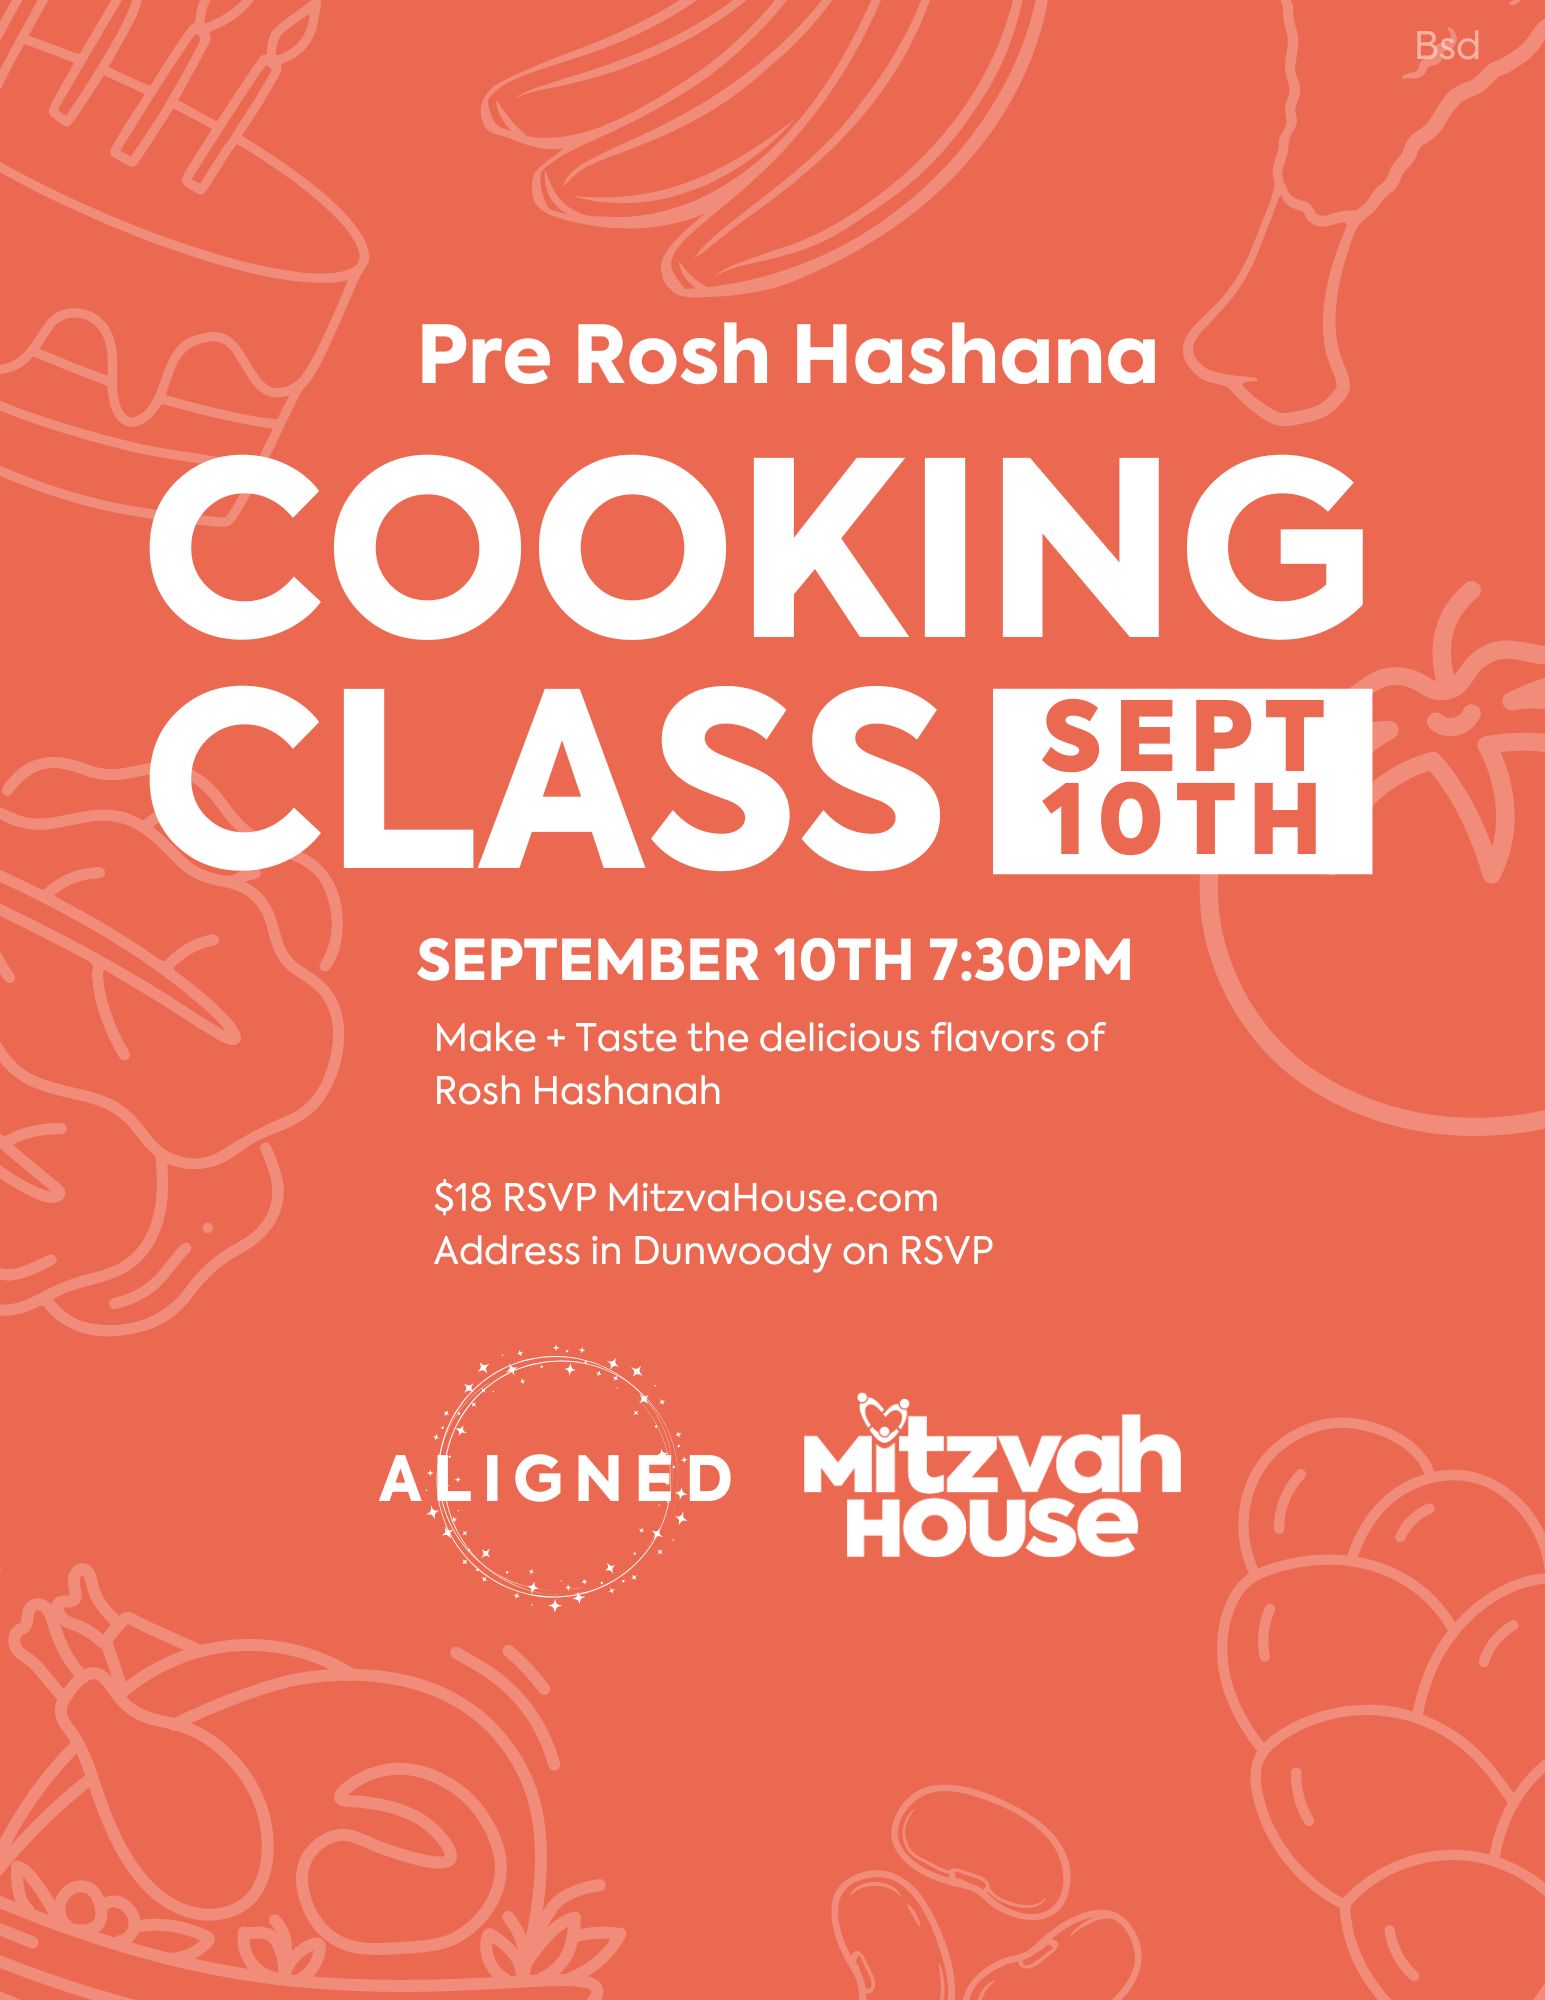 Pre Rosh Hashana Cooking Class